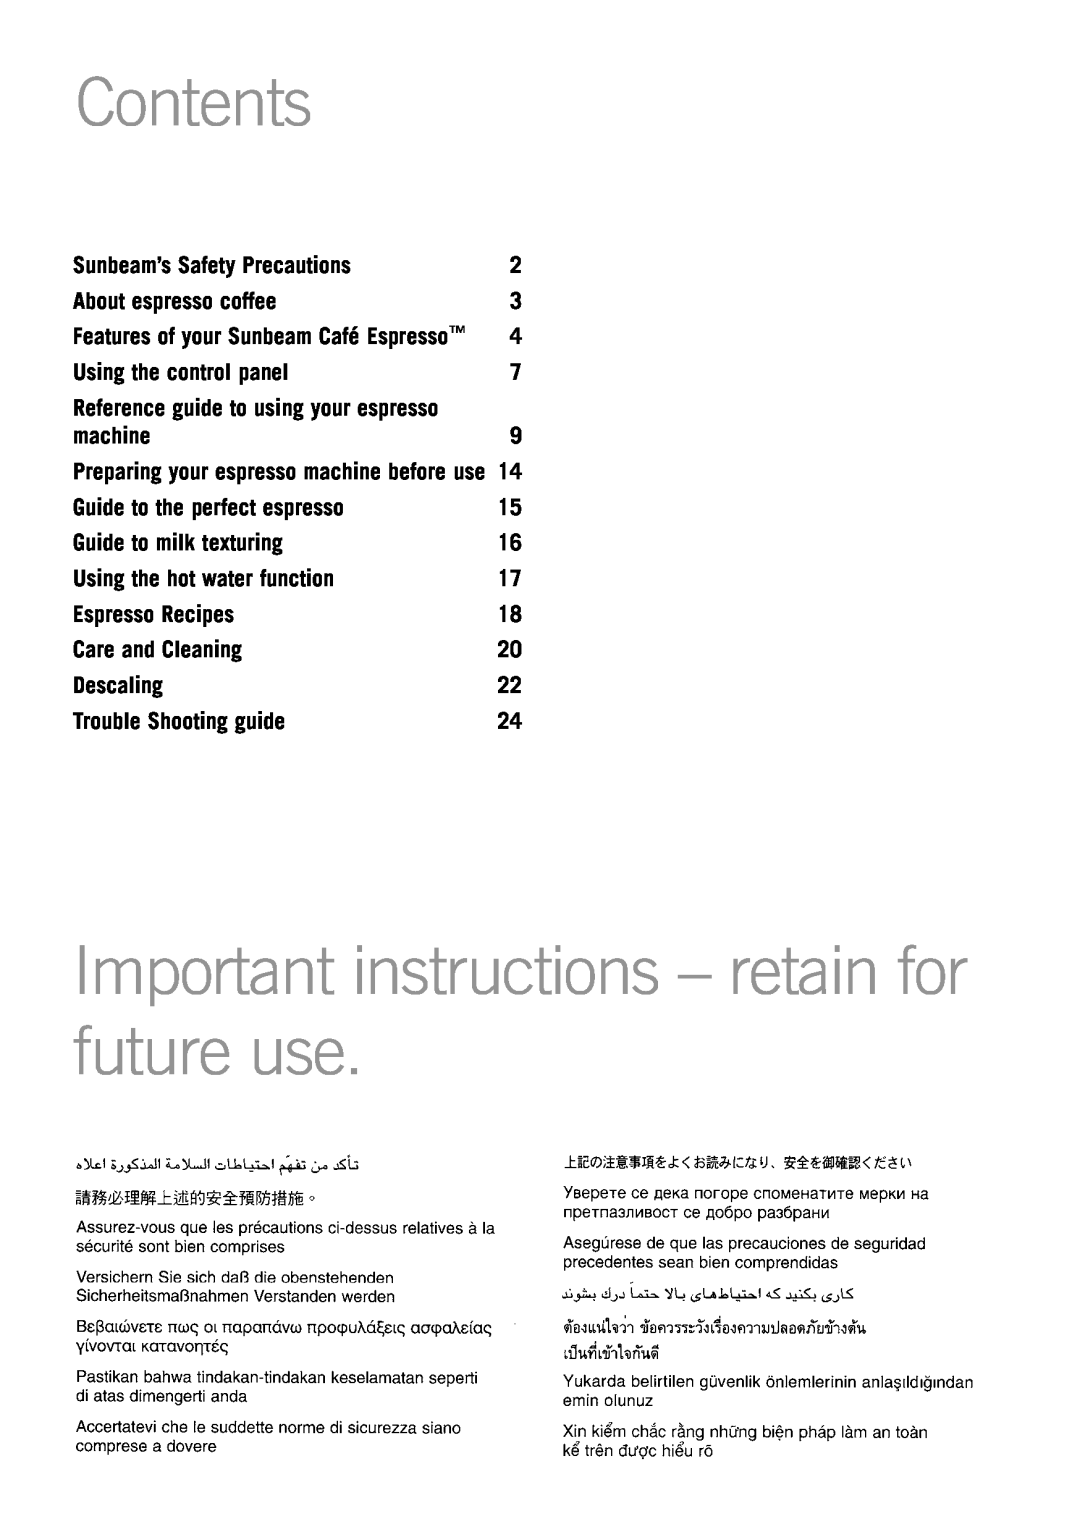 Sunbeam EM3800 Contents, Important instructions – retain for future use, Sunbeam’s Safety Precautions, machine, Descaling 